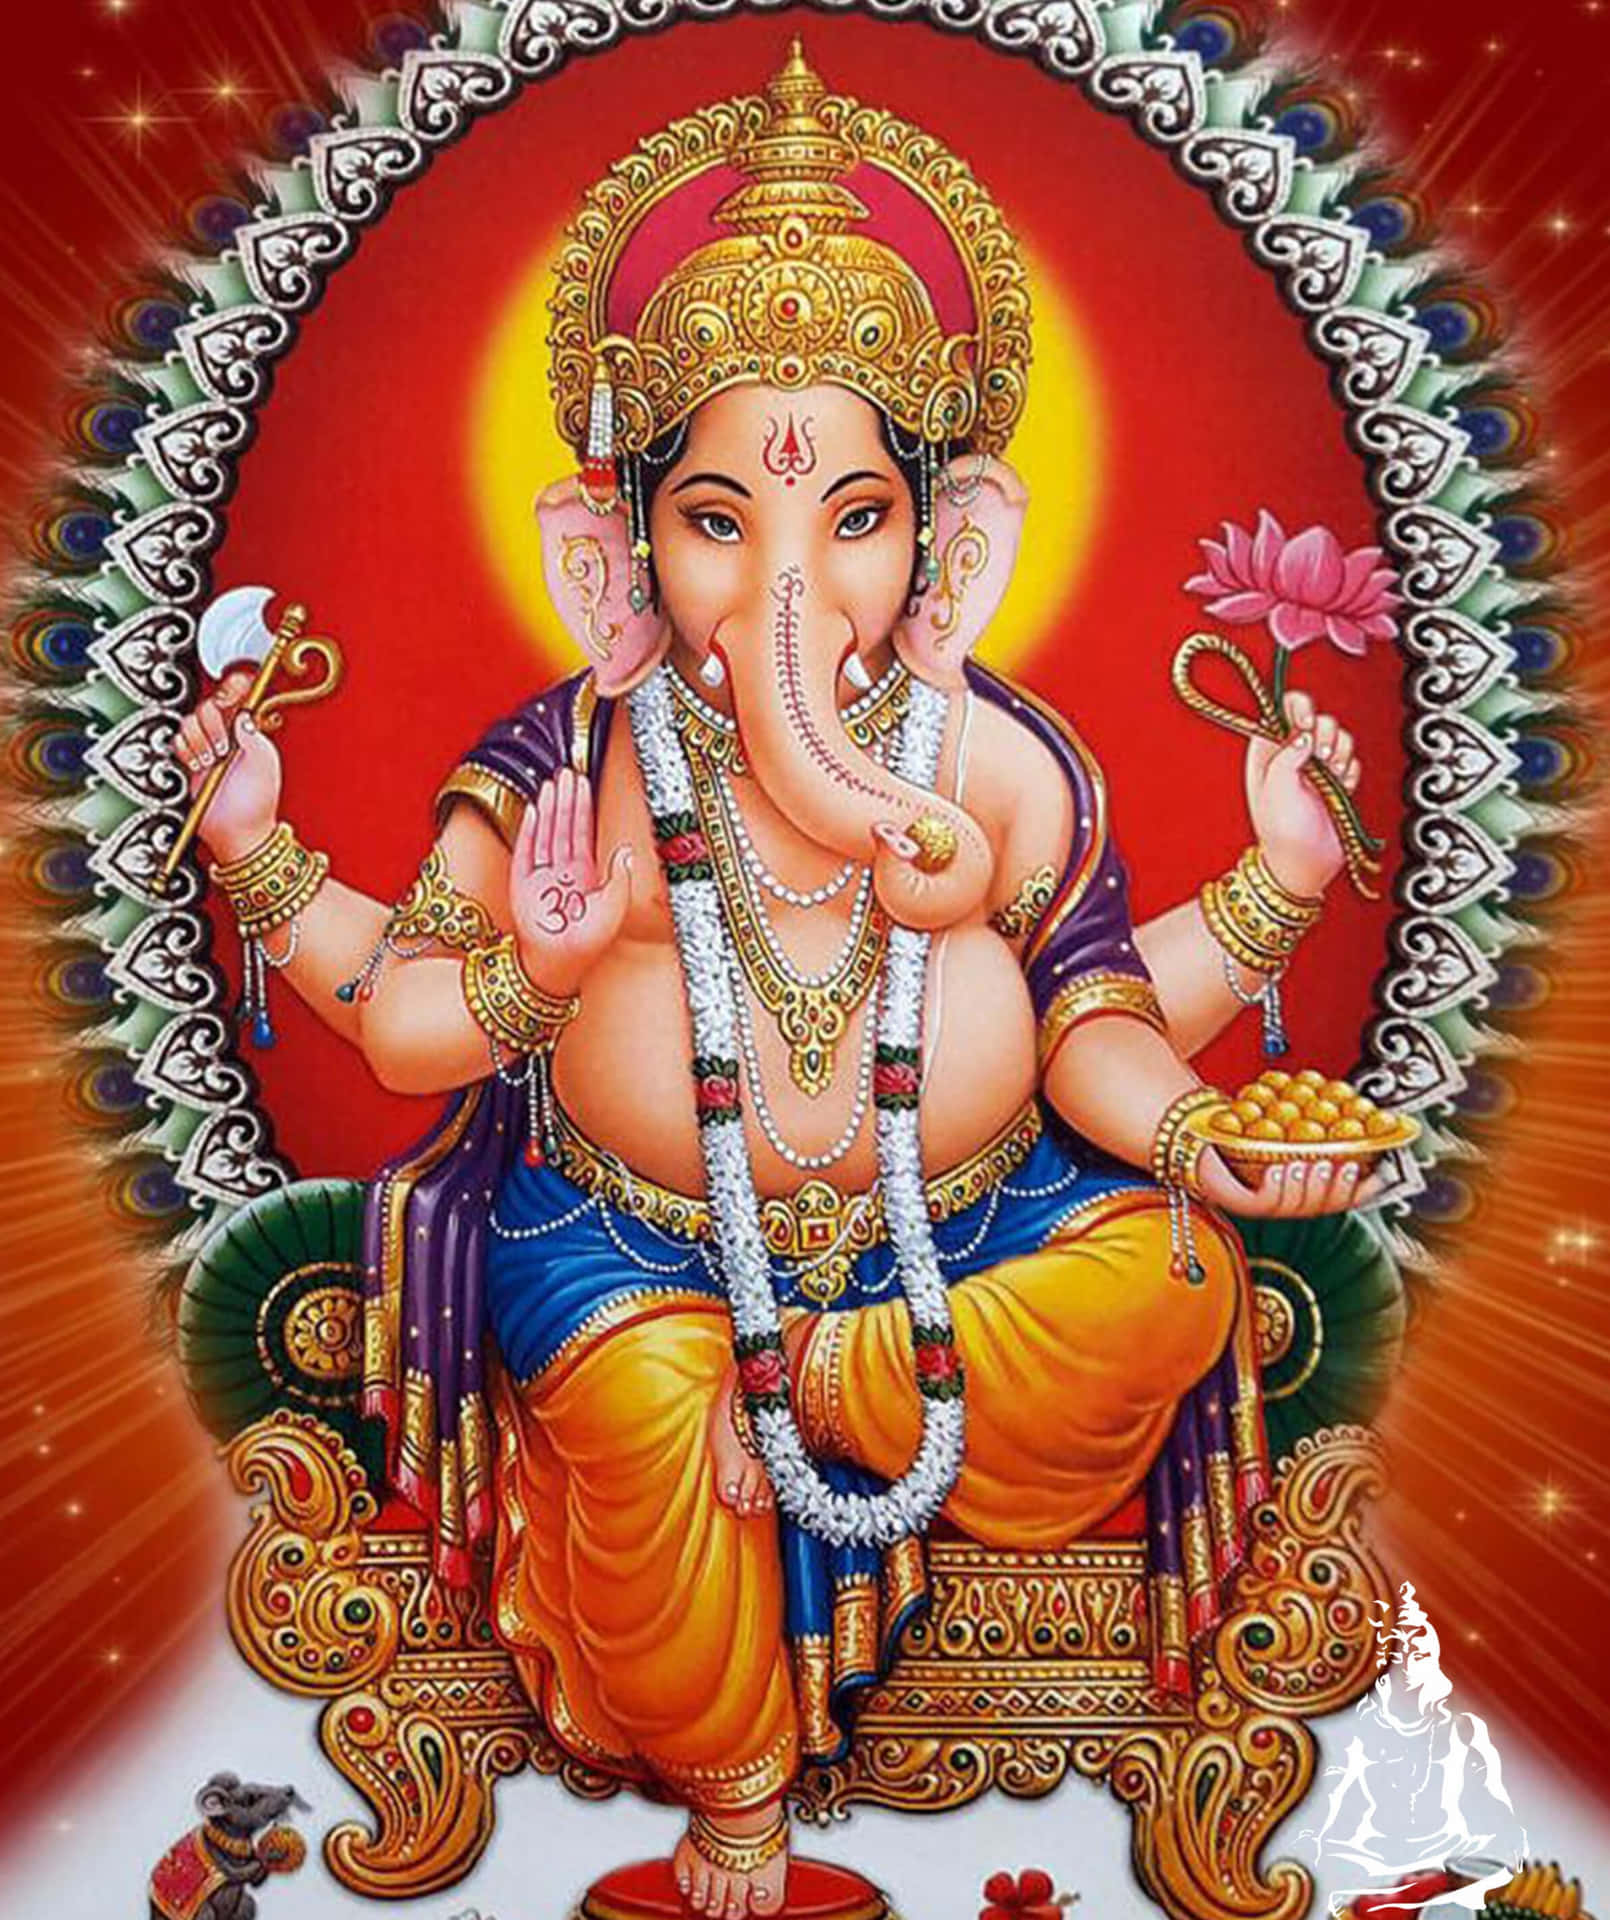 Vidensog Rigdommens Herre, Lord Ganesha.